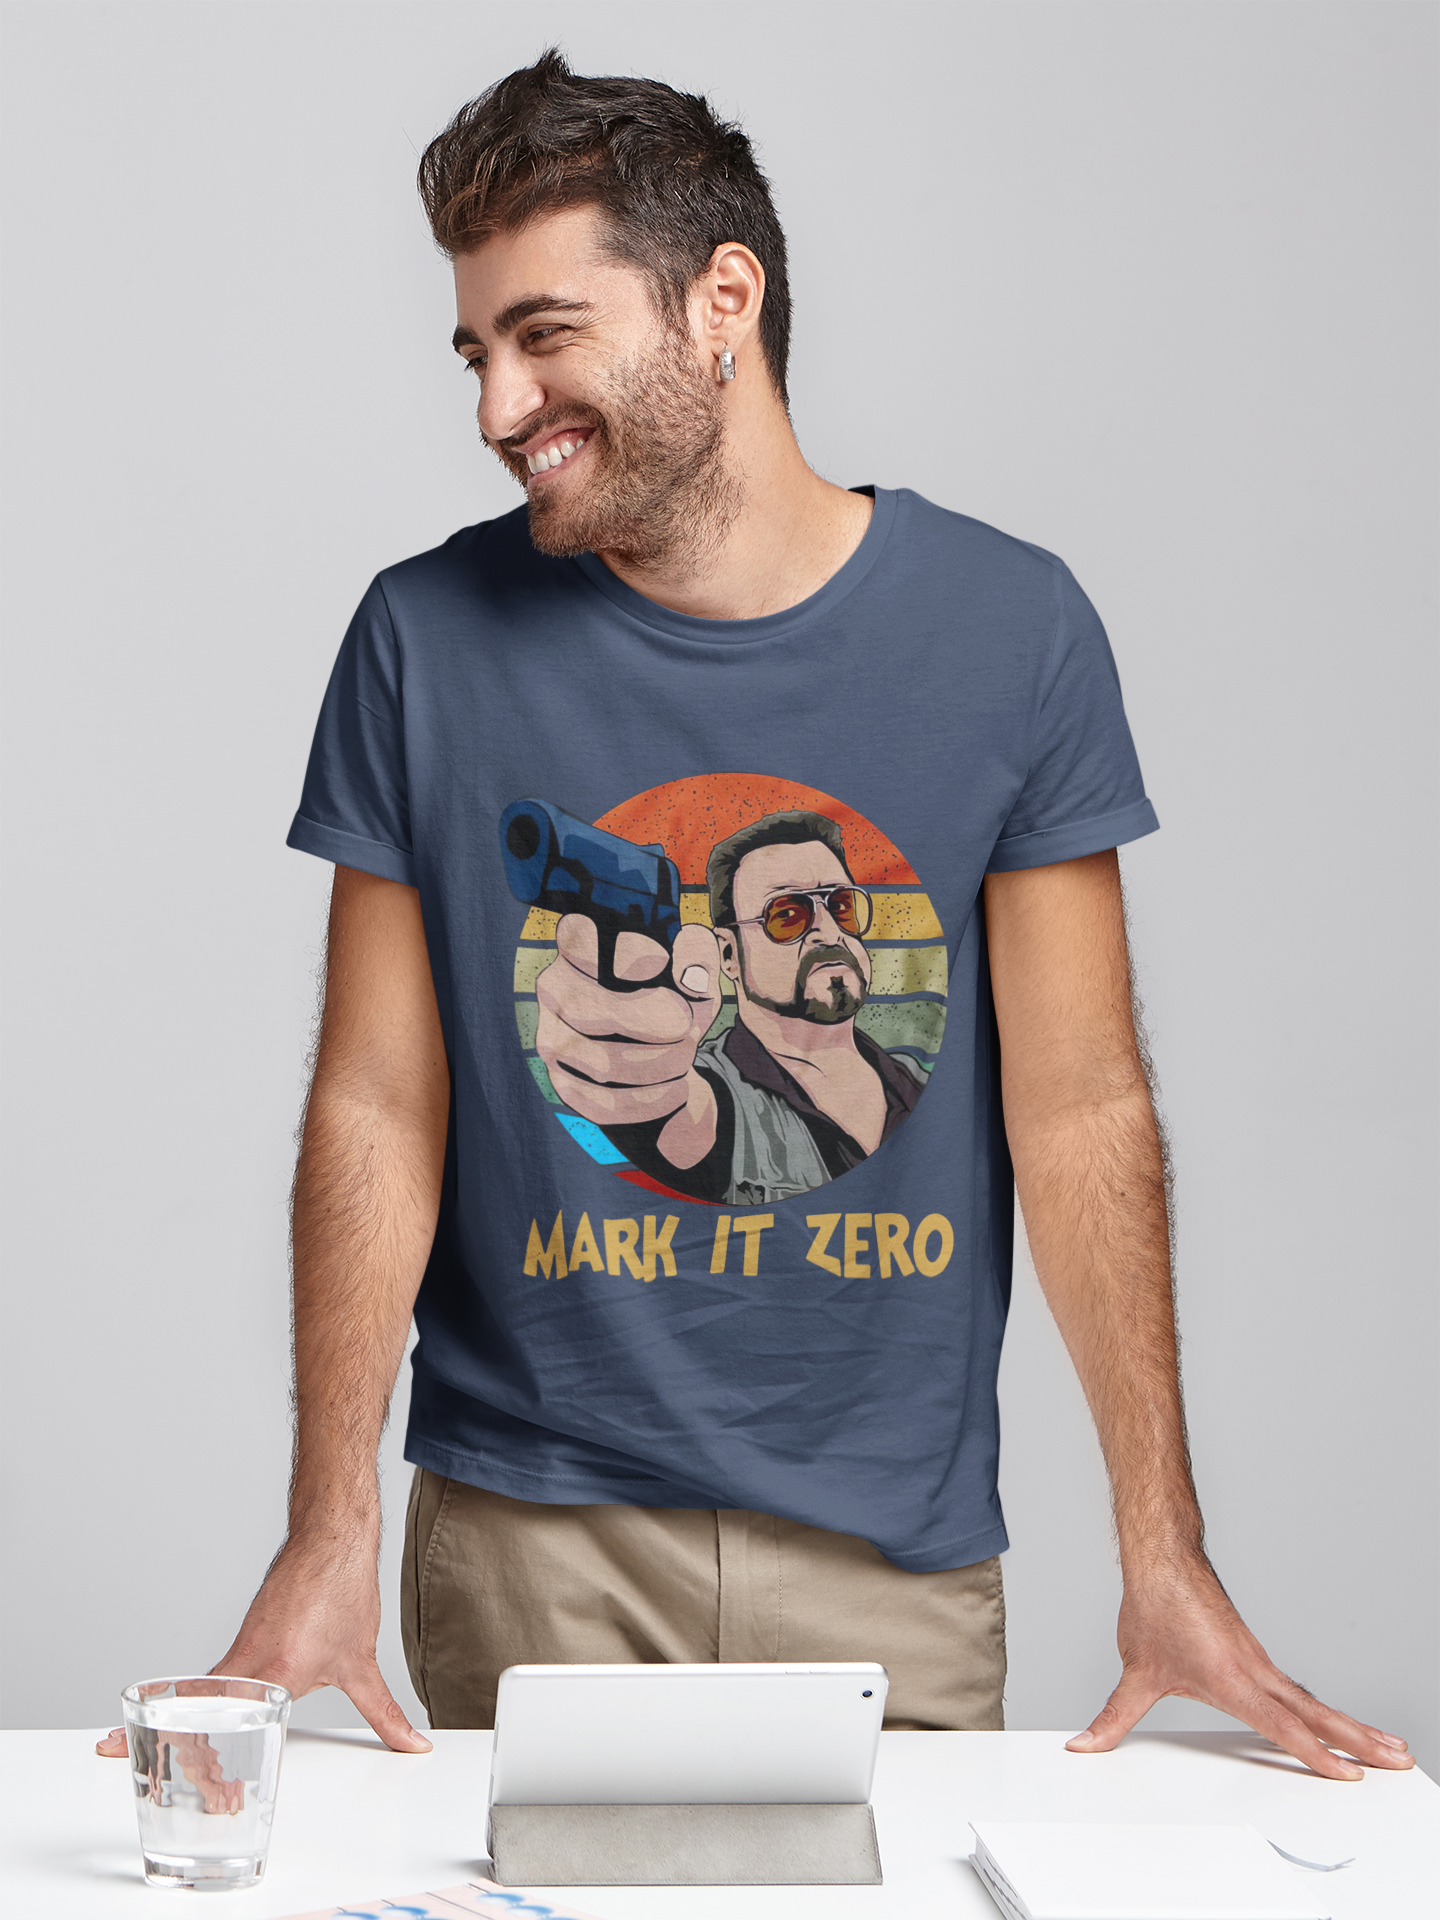 The Big Lebowski T Shirt, Walter Sobchak T Shirt, Mark It Zero Vintage Pointing A Gun Tshirt